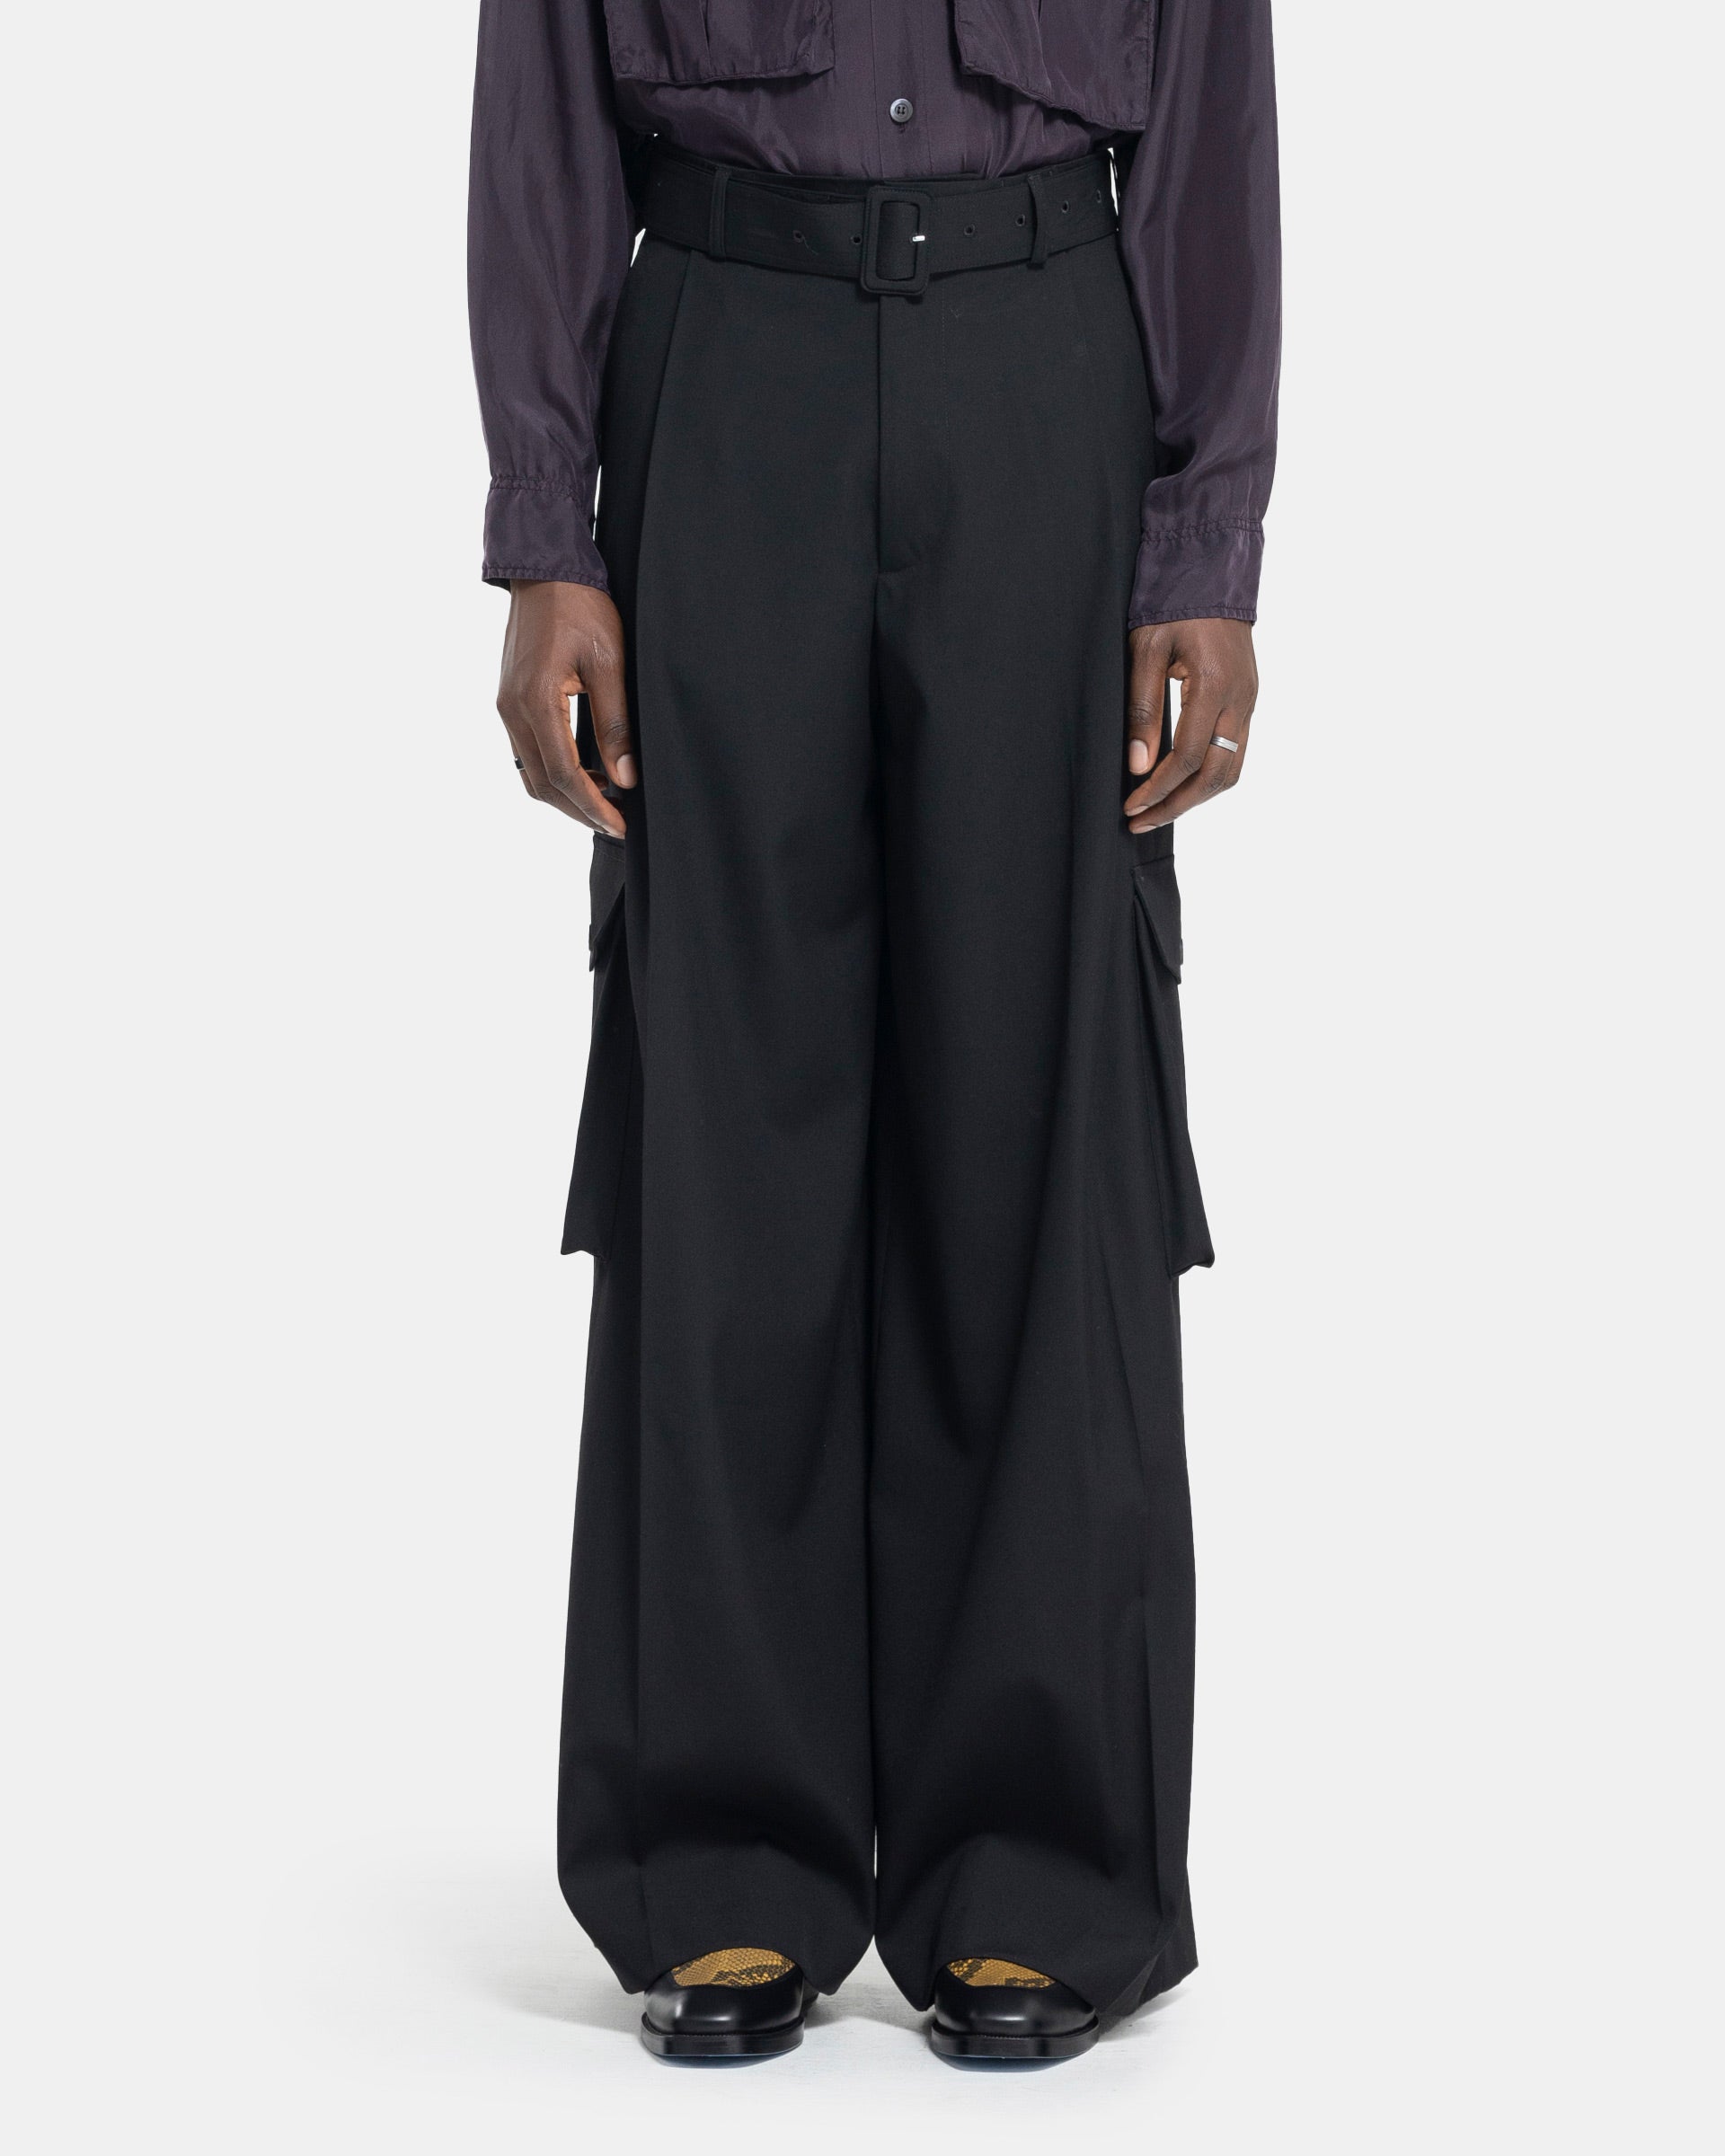 Triblend Pants [PA746-TRIBLEND-GREY] - FlynnO'Hara Uniforms